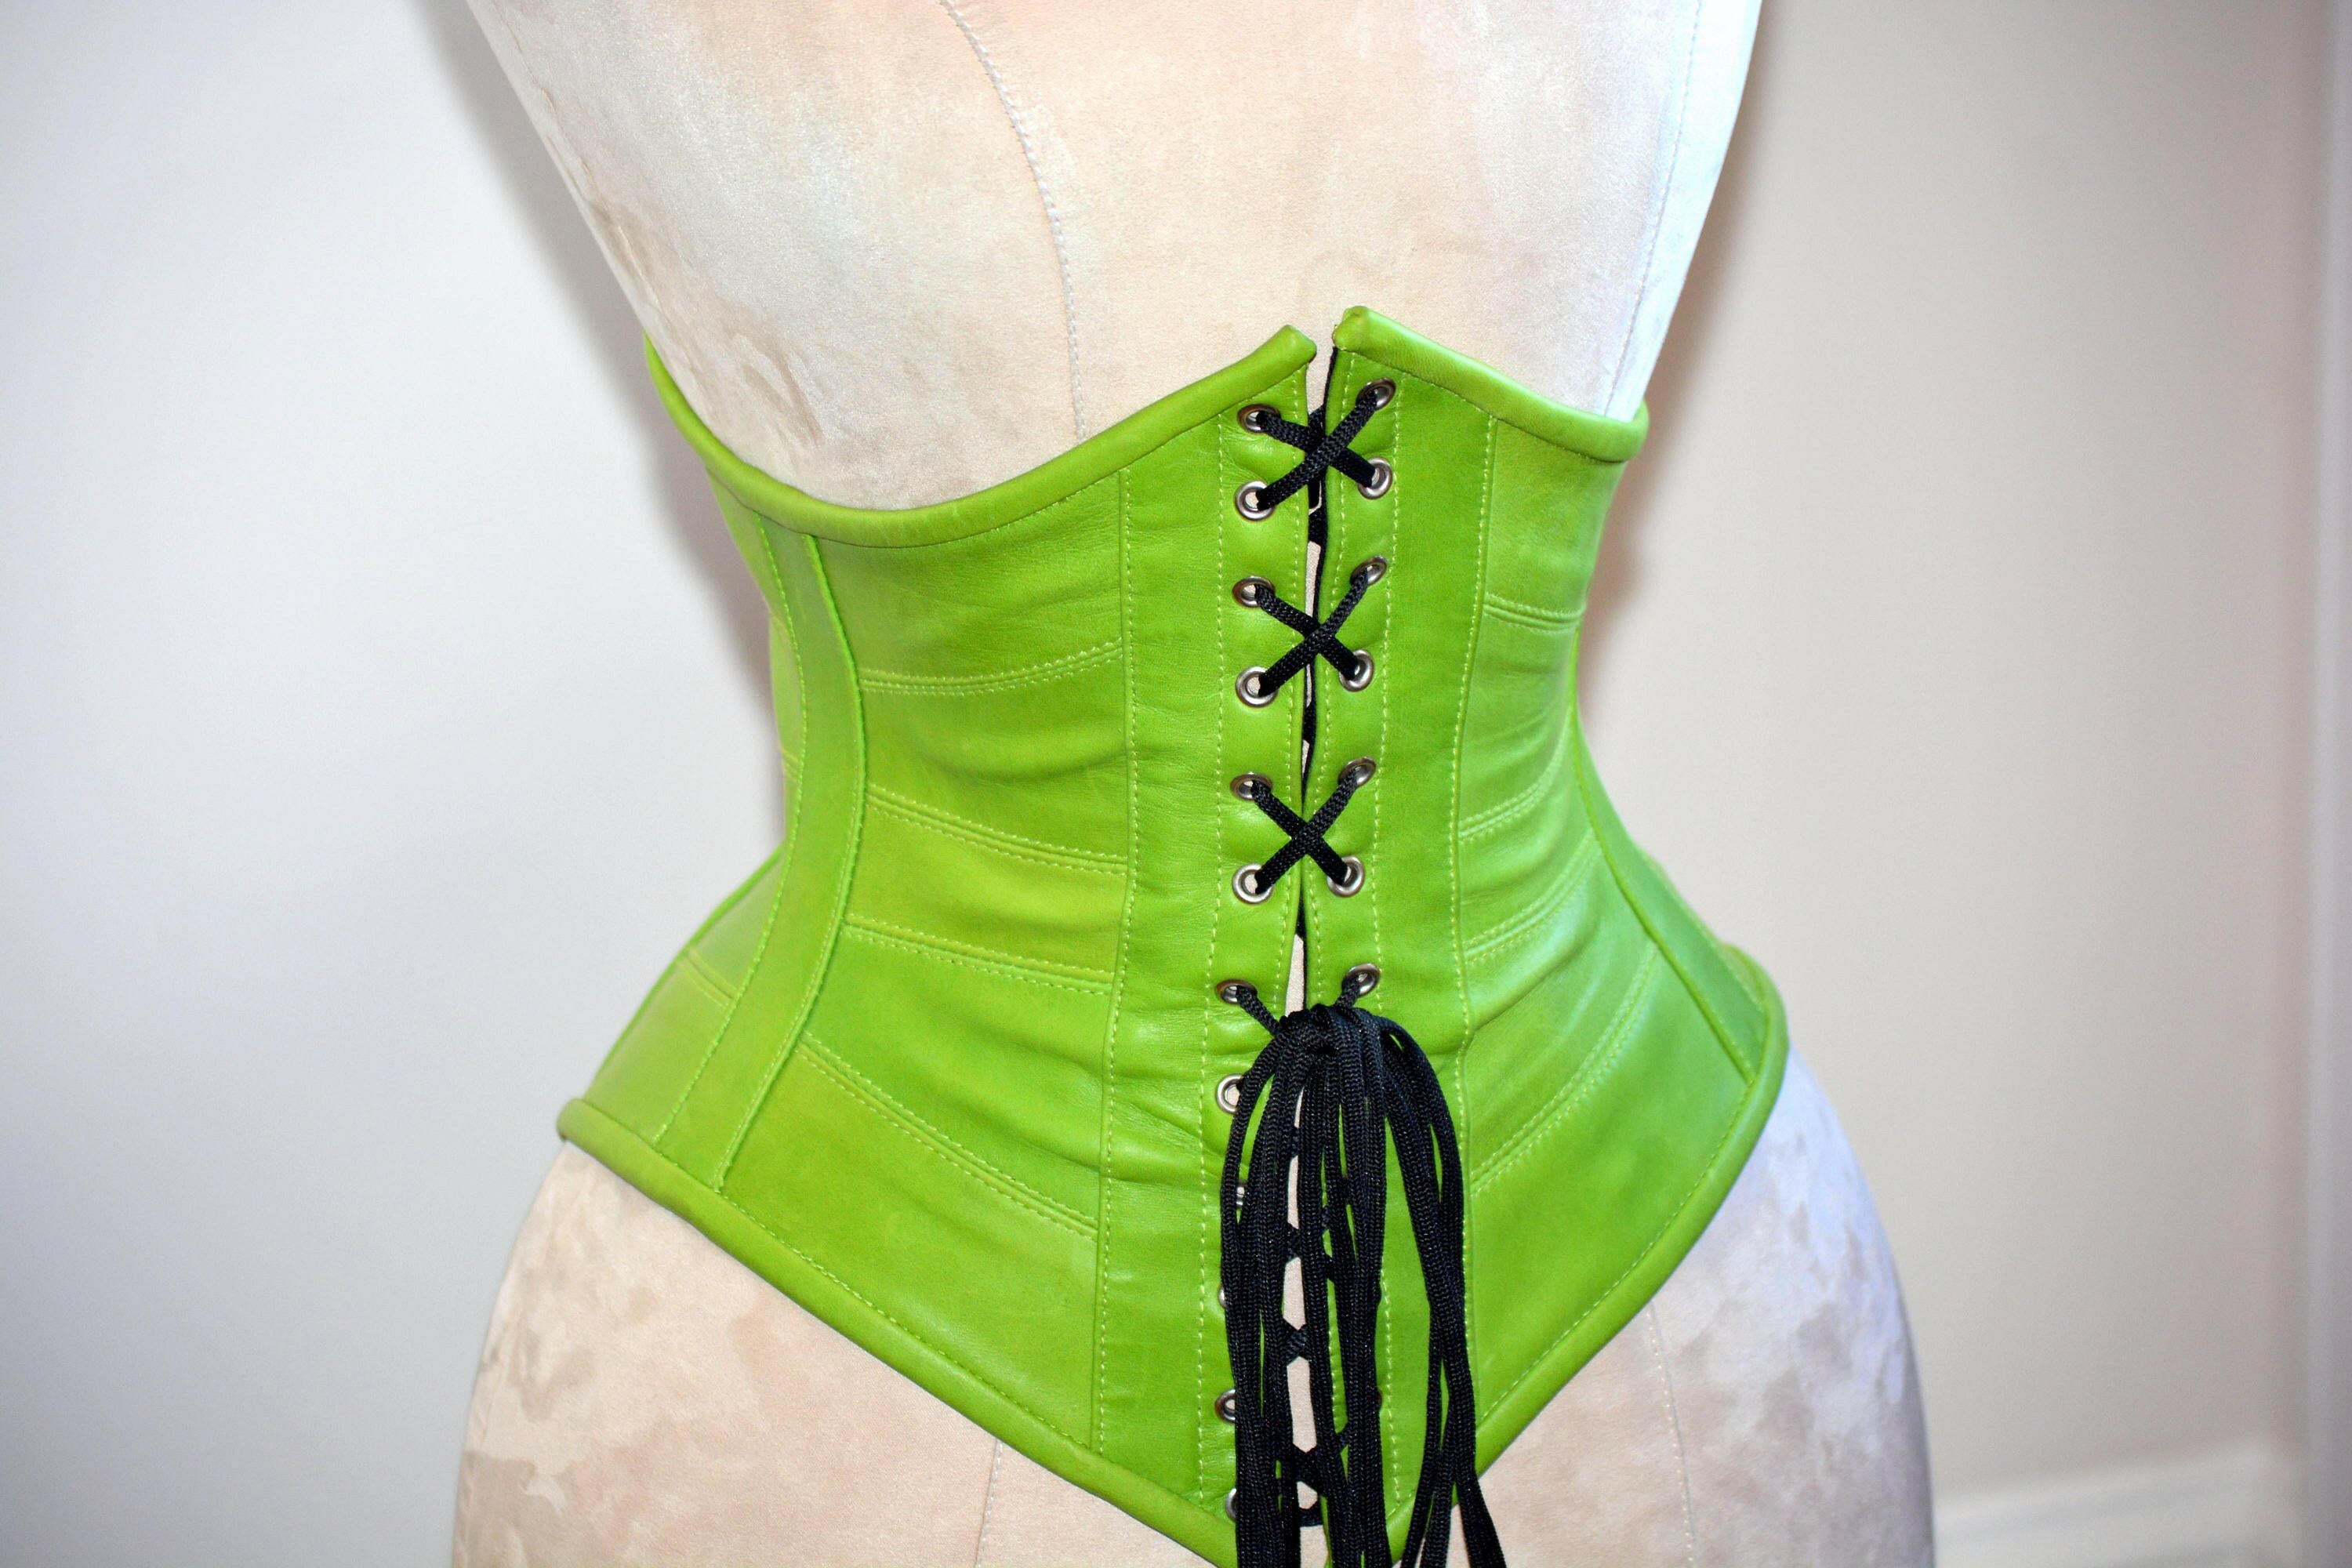 Authentic trendy green steel boned underbust leather corset